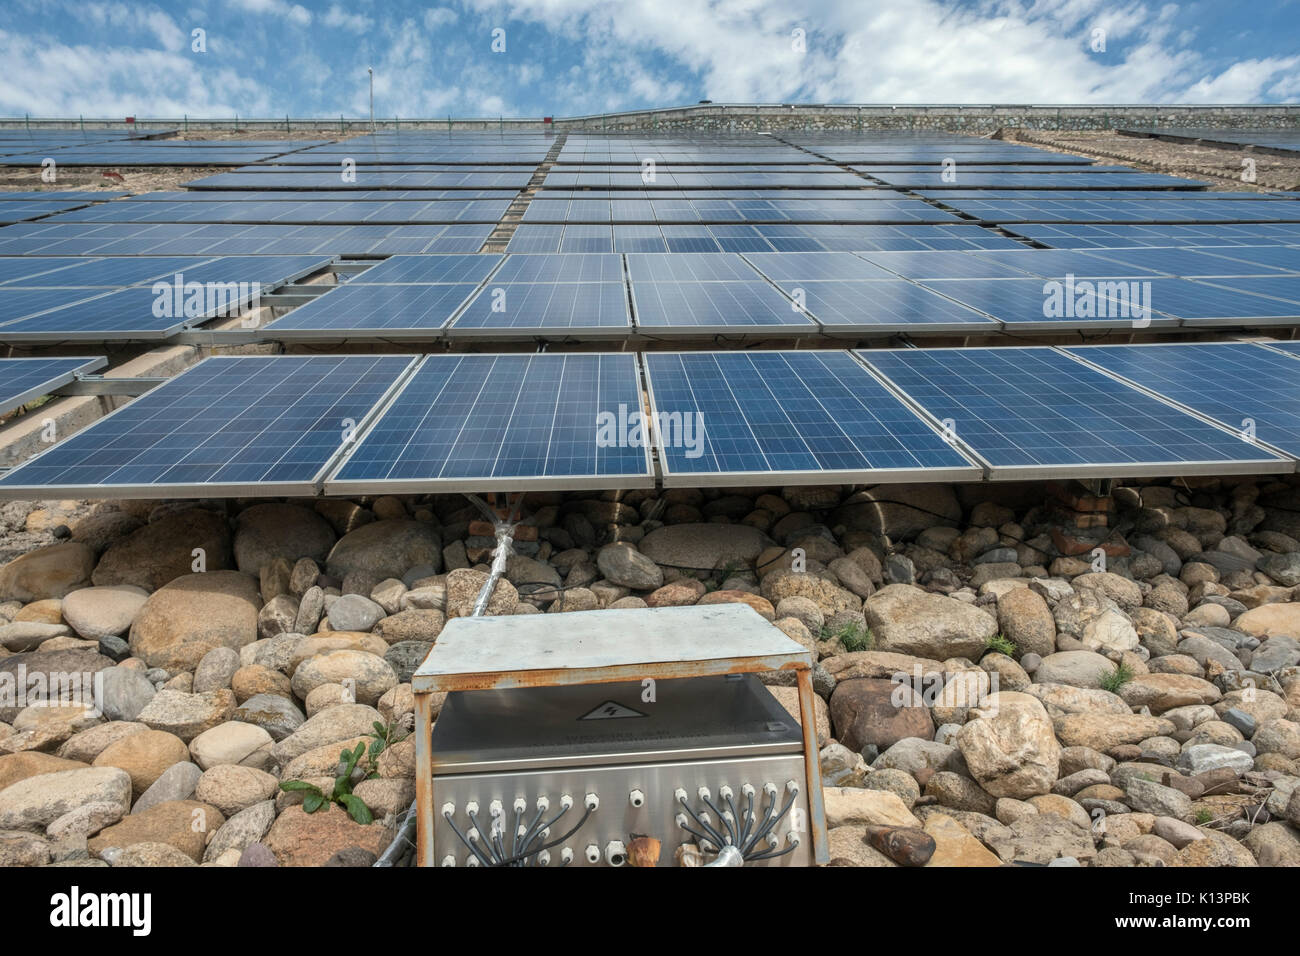 Photovoltaik Solar Panels Mit Smart Pv Anschlussbox Auf Dem Damm Von Yanqi See In Huairou Peking China 24 Aug 2017 Stockfotografie Alamy